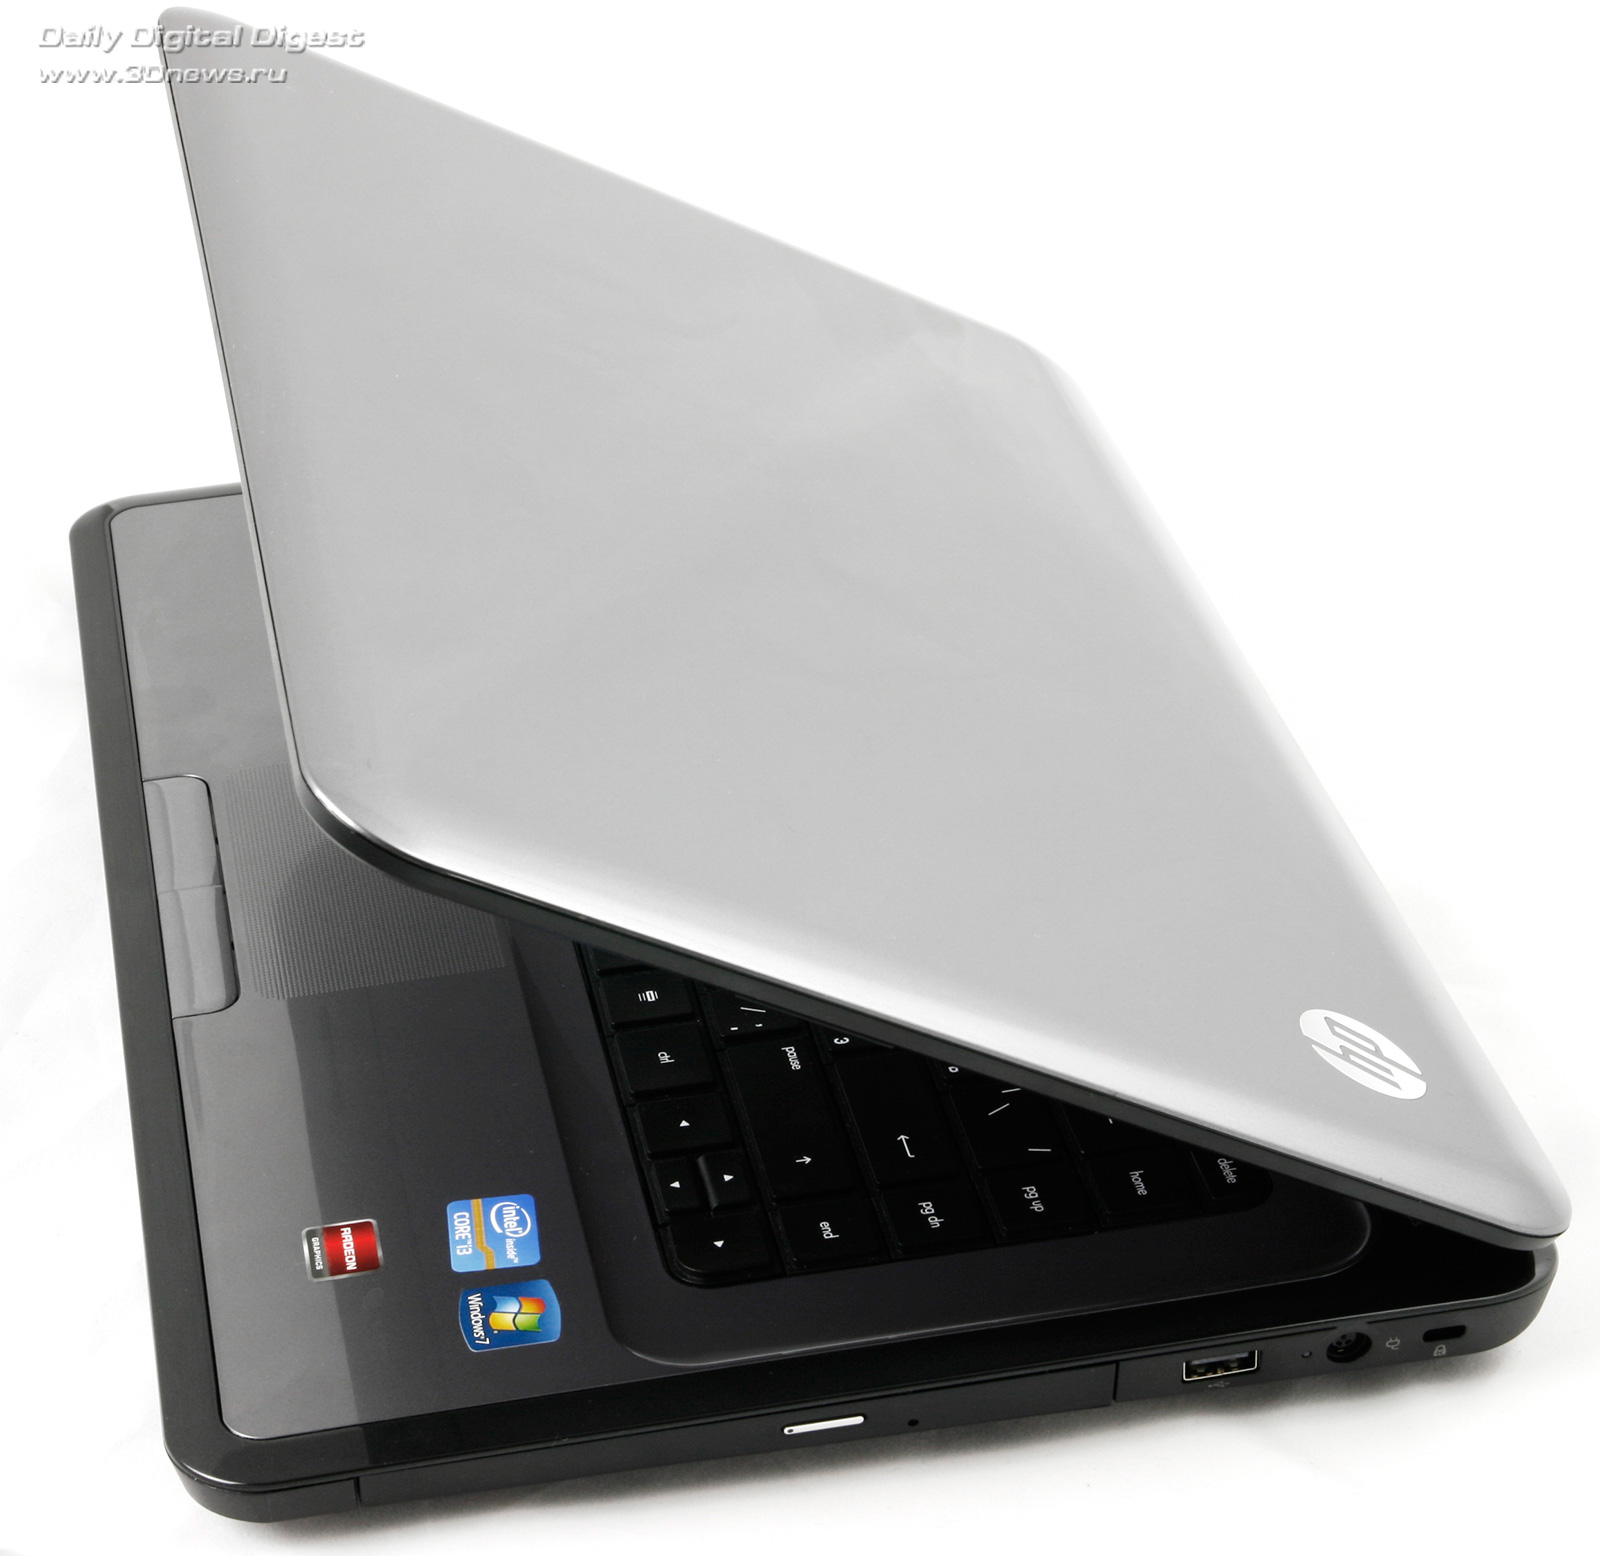 Ноутбук Hp Pavilion G6 Характеристика И Цена